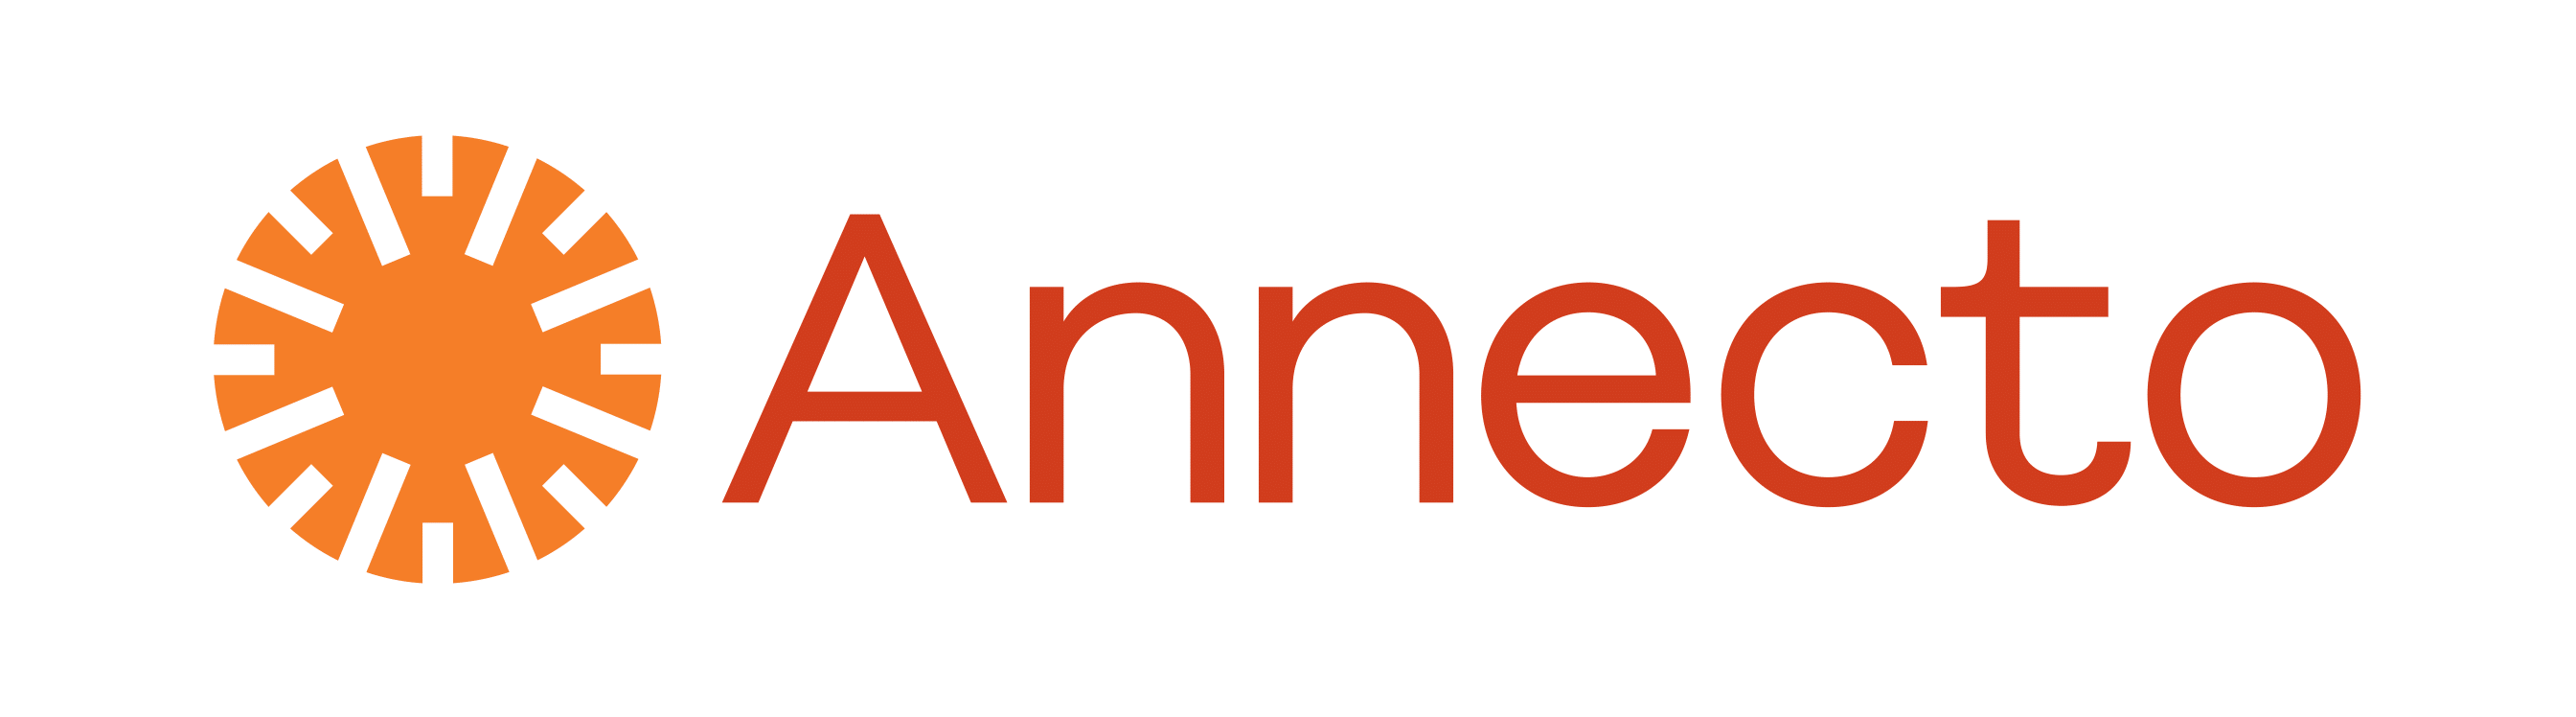 Annecto logo CMYK 2021 (002)